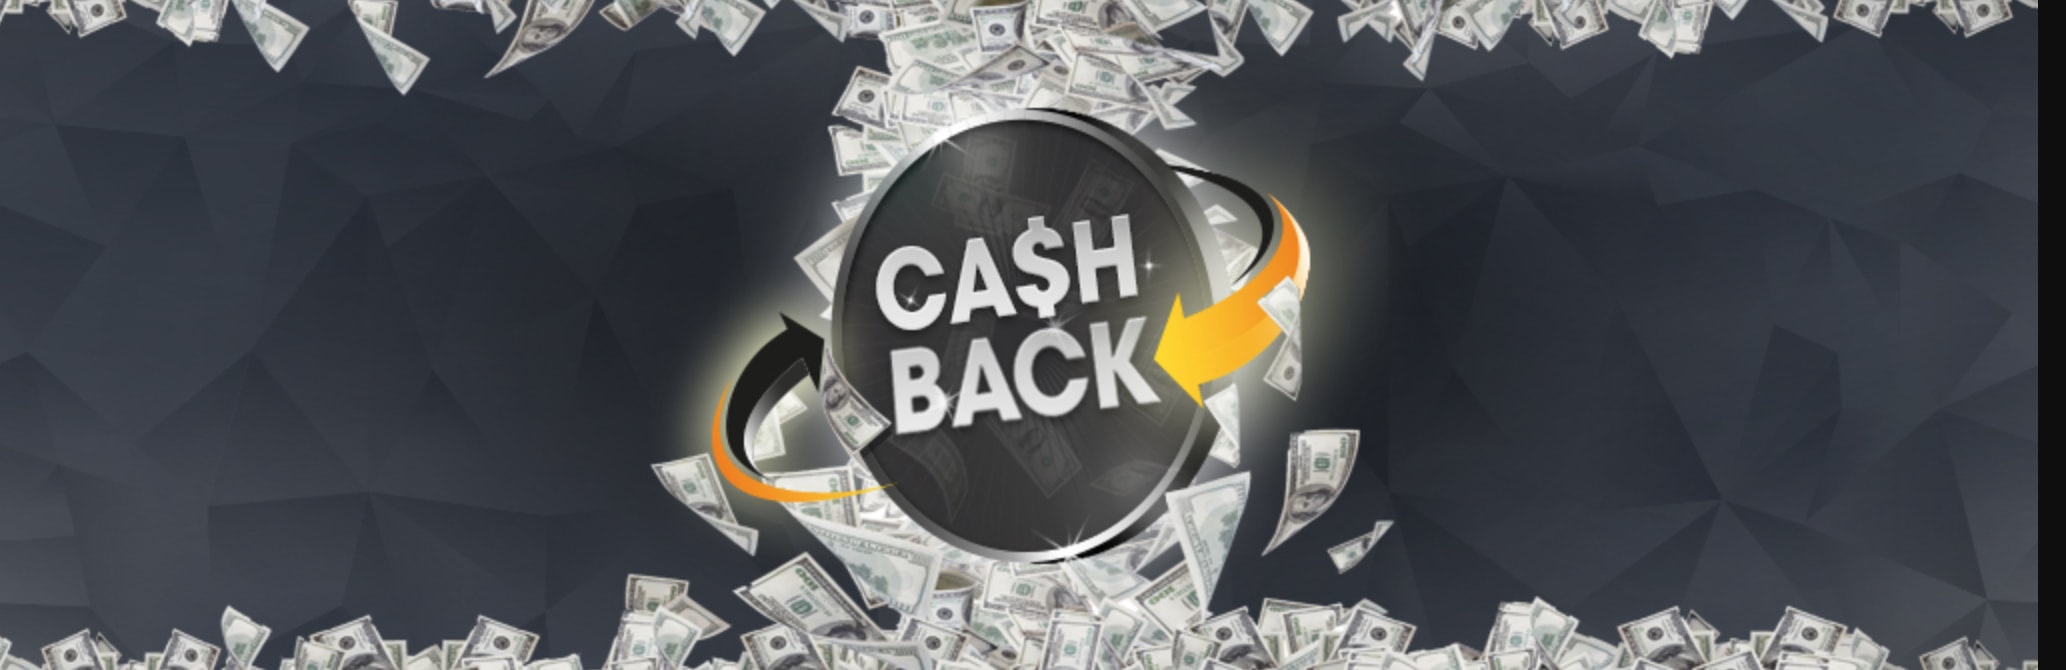 casino cashback bonus www.statistik-obwalden.ch